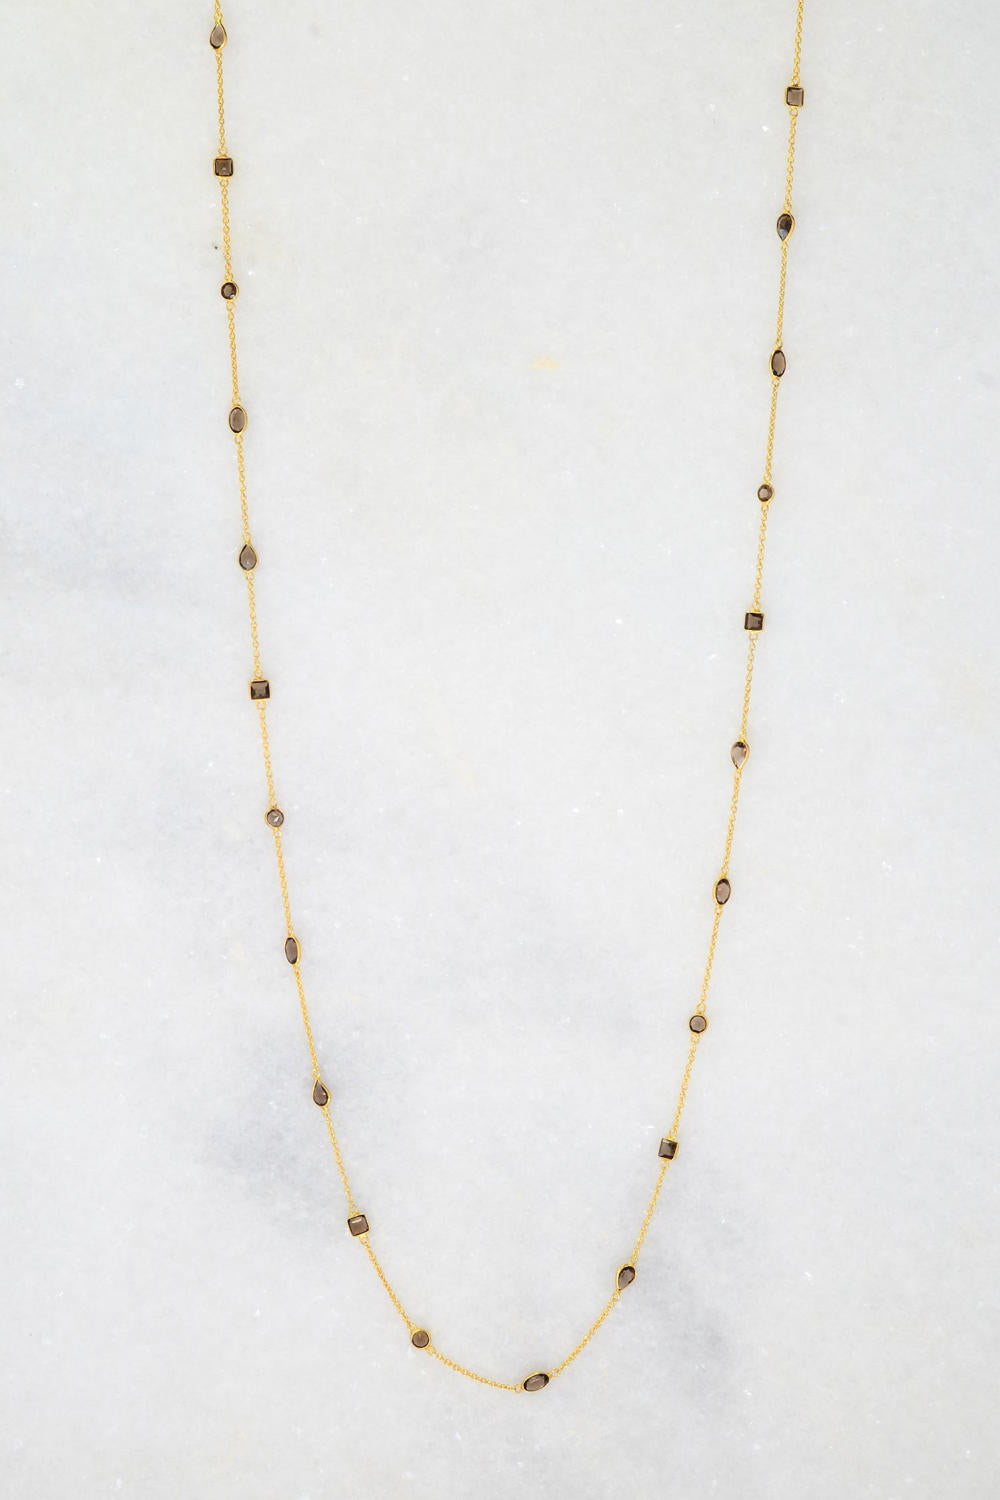 Layered Long Necklace - Gemstone  Layered necklace - Smoky Quartz Necklace - Stationed Necklace - Gem Necklace - Layering Necklace